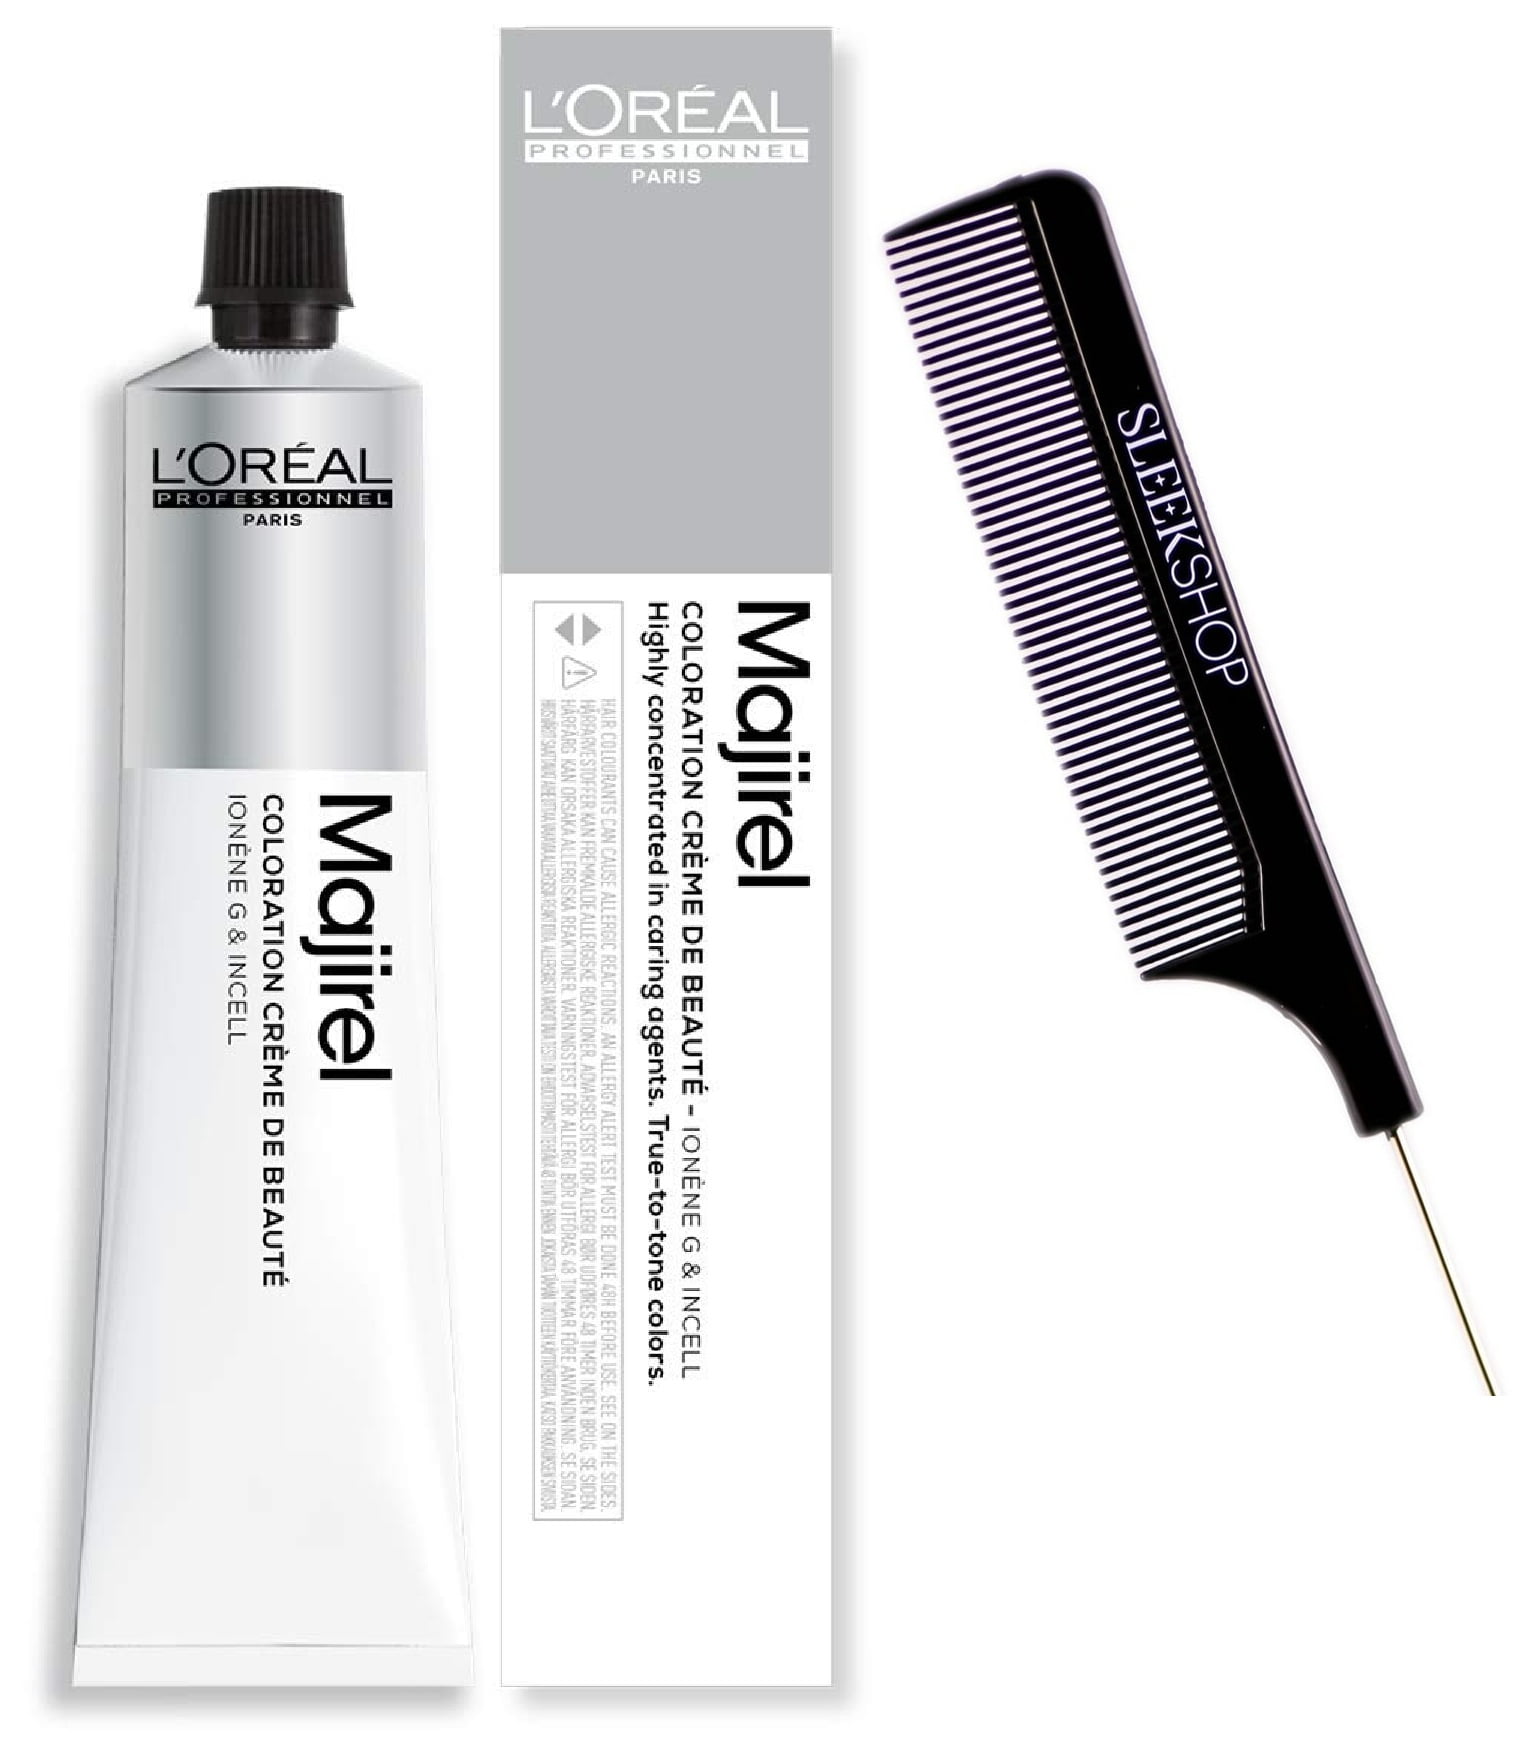 1 / 1N - Black , L'oreal MAJIREL Professional Cream Permanent Hair Color  Dye Haircolor Ionene G & Incell Loreal - Pack of 2 w/ Sleek Pin Comb -  